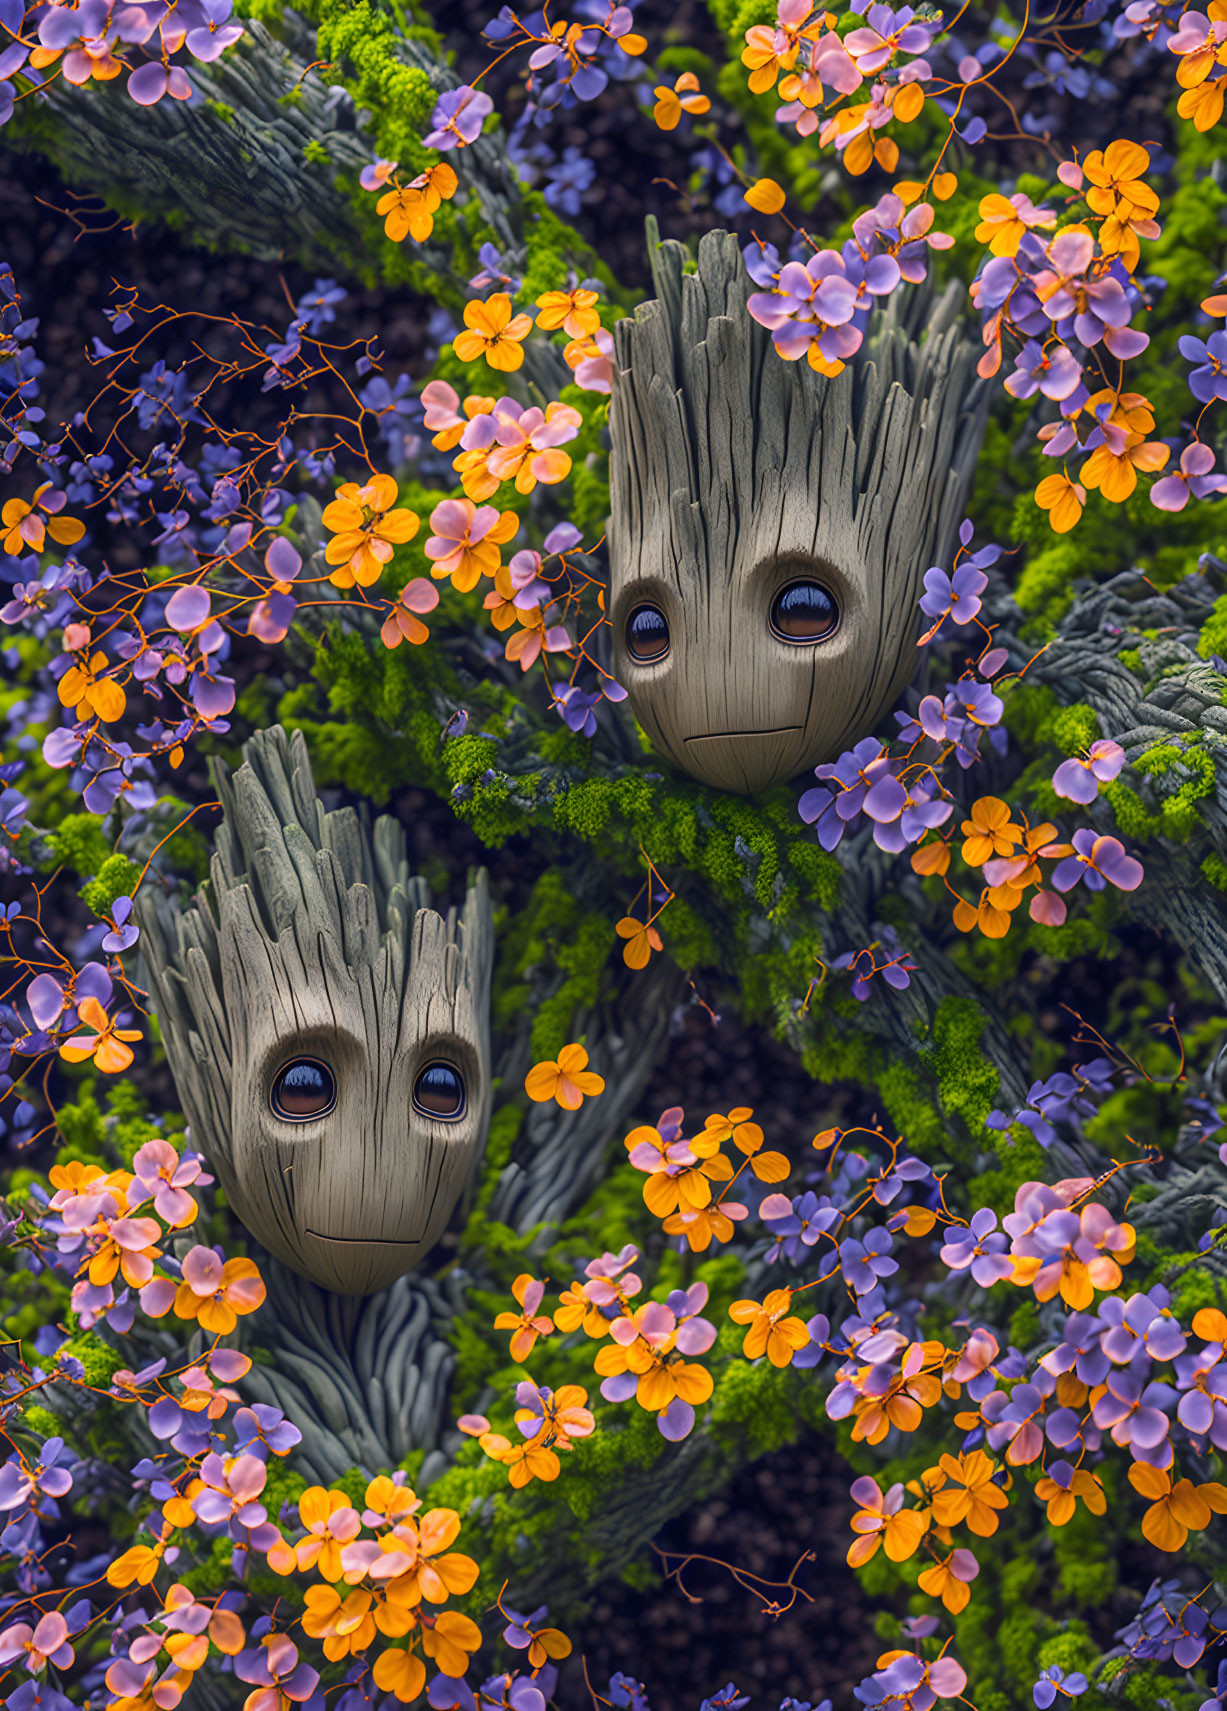 Baby Groot Figures Among Orange and Purple Flowers with Moss Backdrop